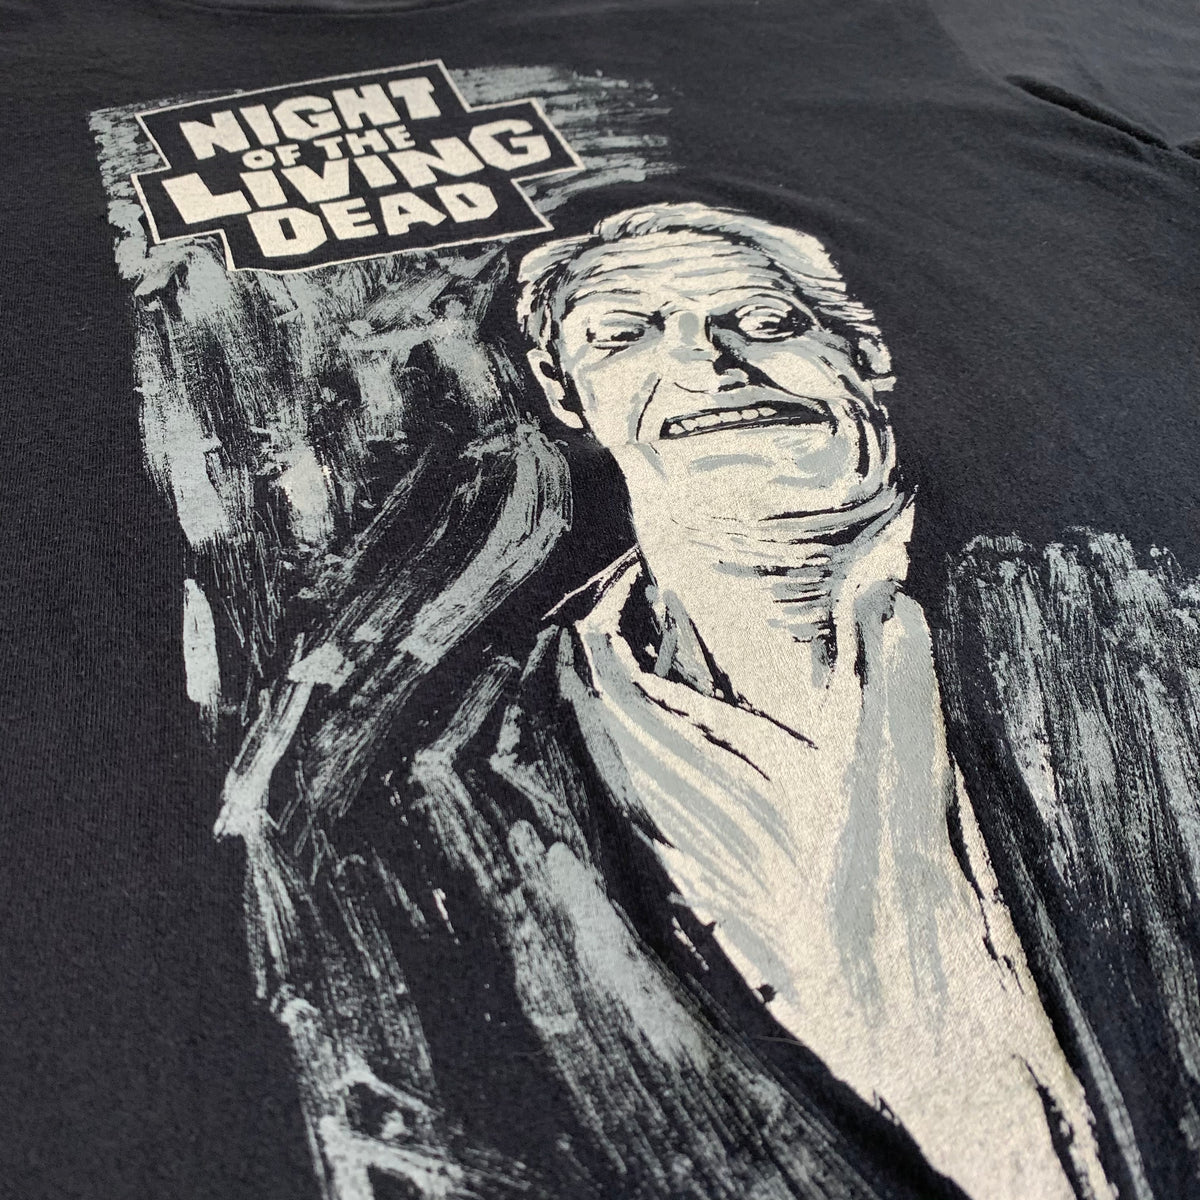 Vintage Night Of The Living Dead &quot;Fantaco&quot; T-Shirt